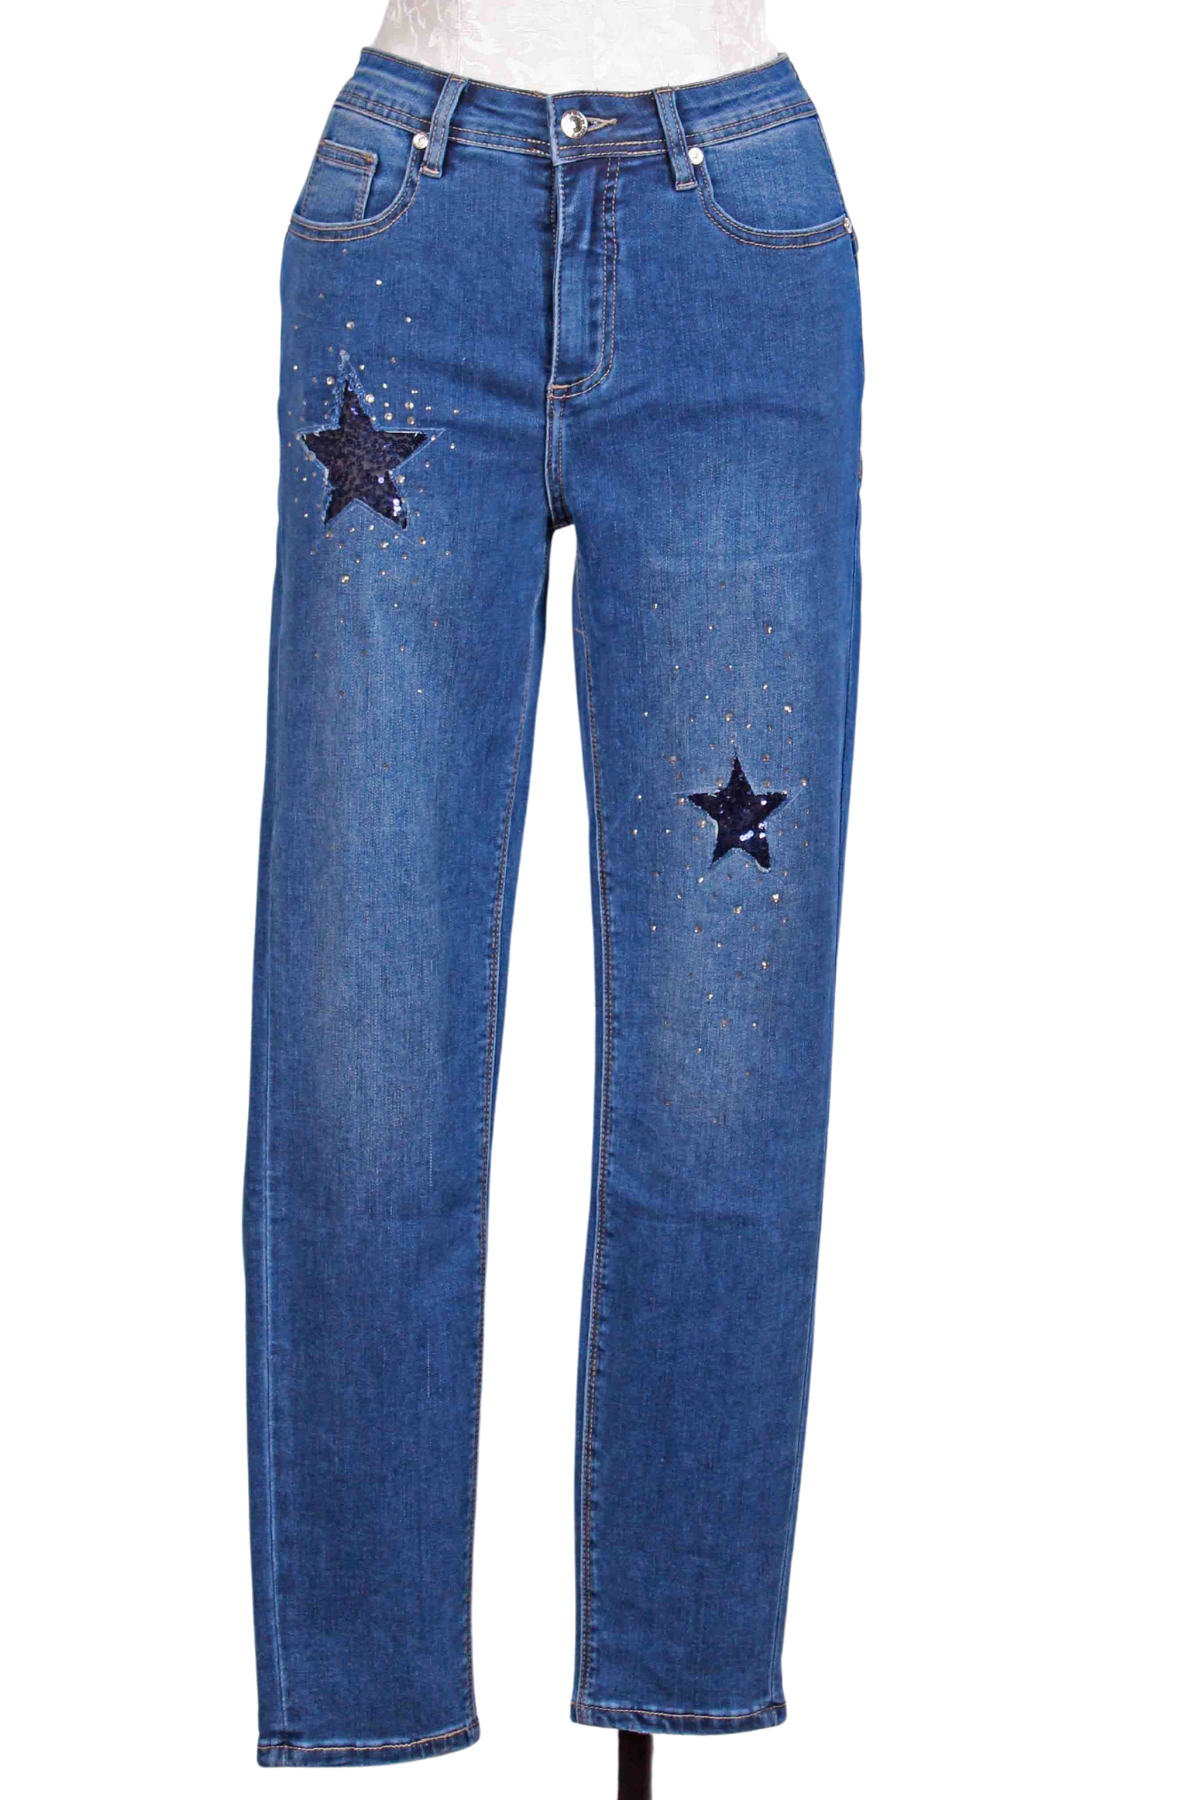 Sequin Star Embellished Jean by Frank Lyman